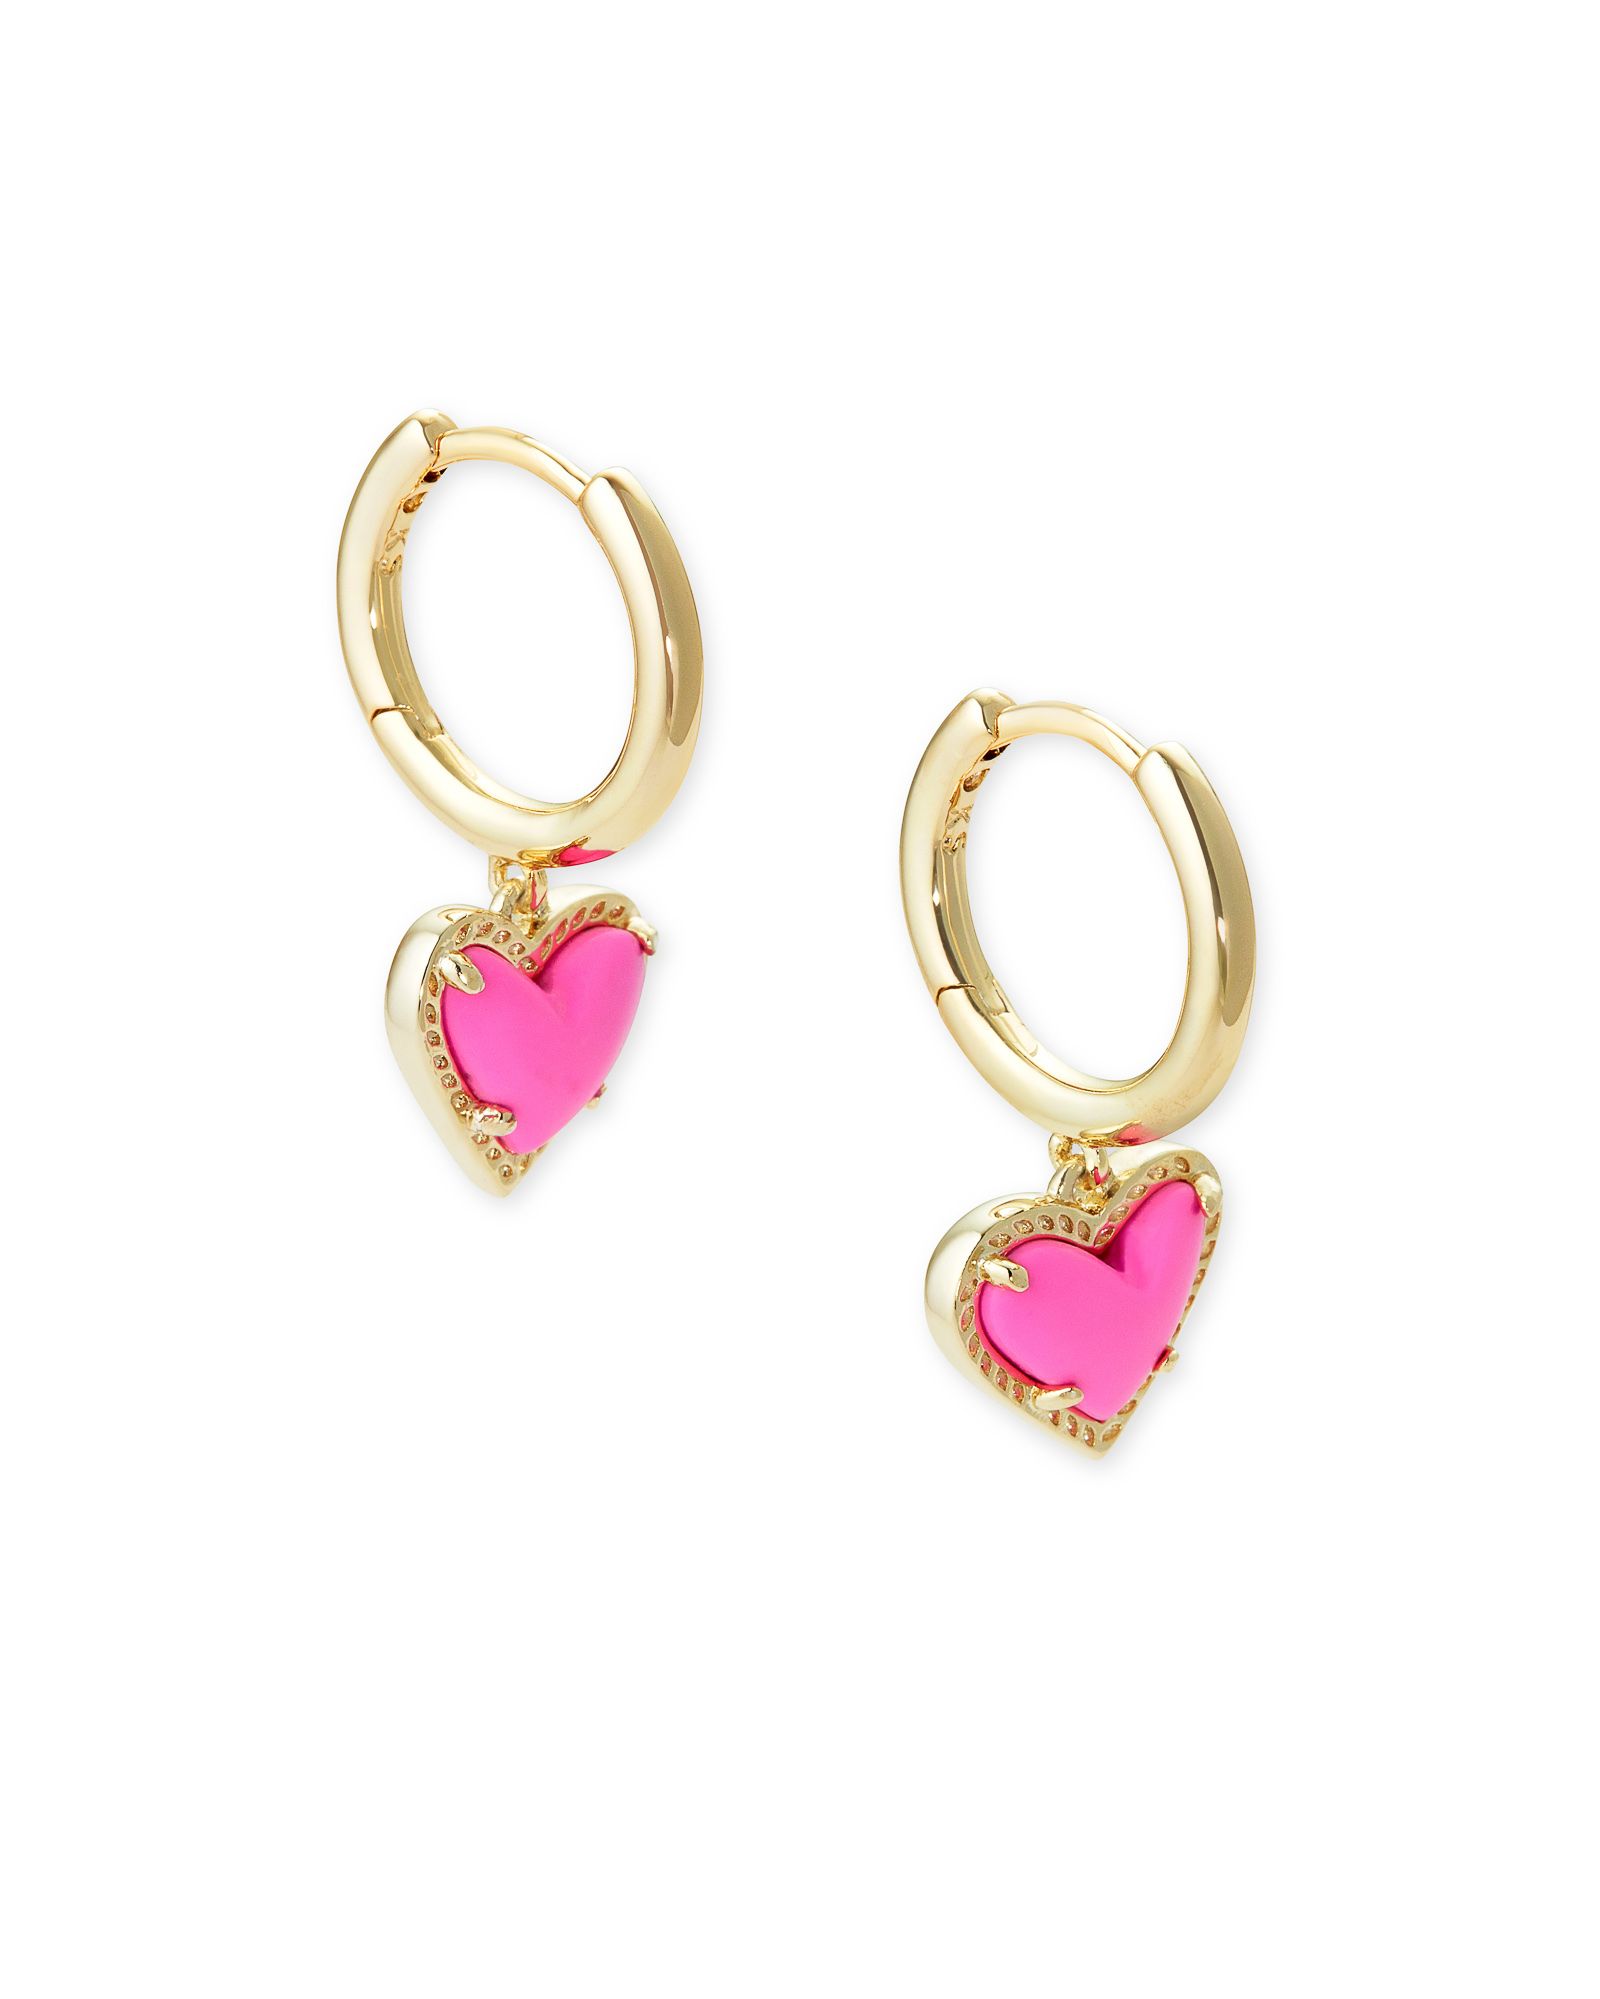 Ari Heart Gold Huggie Earrings in Magenta Magnesite | Kendra Scott